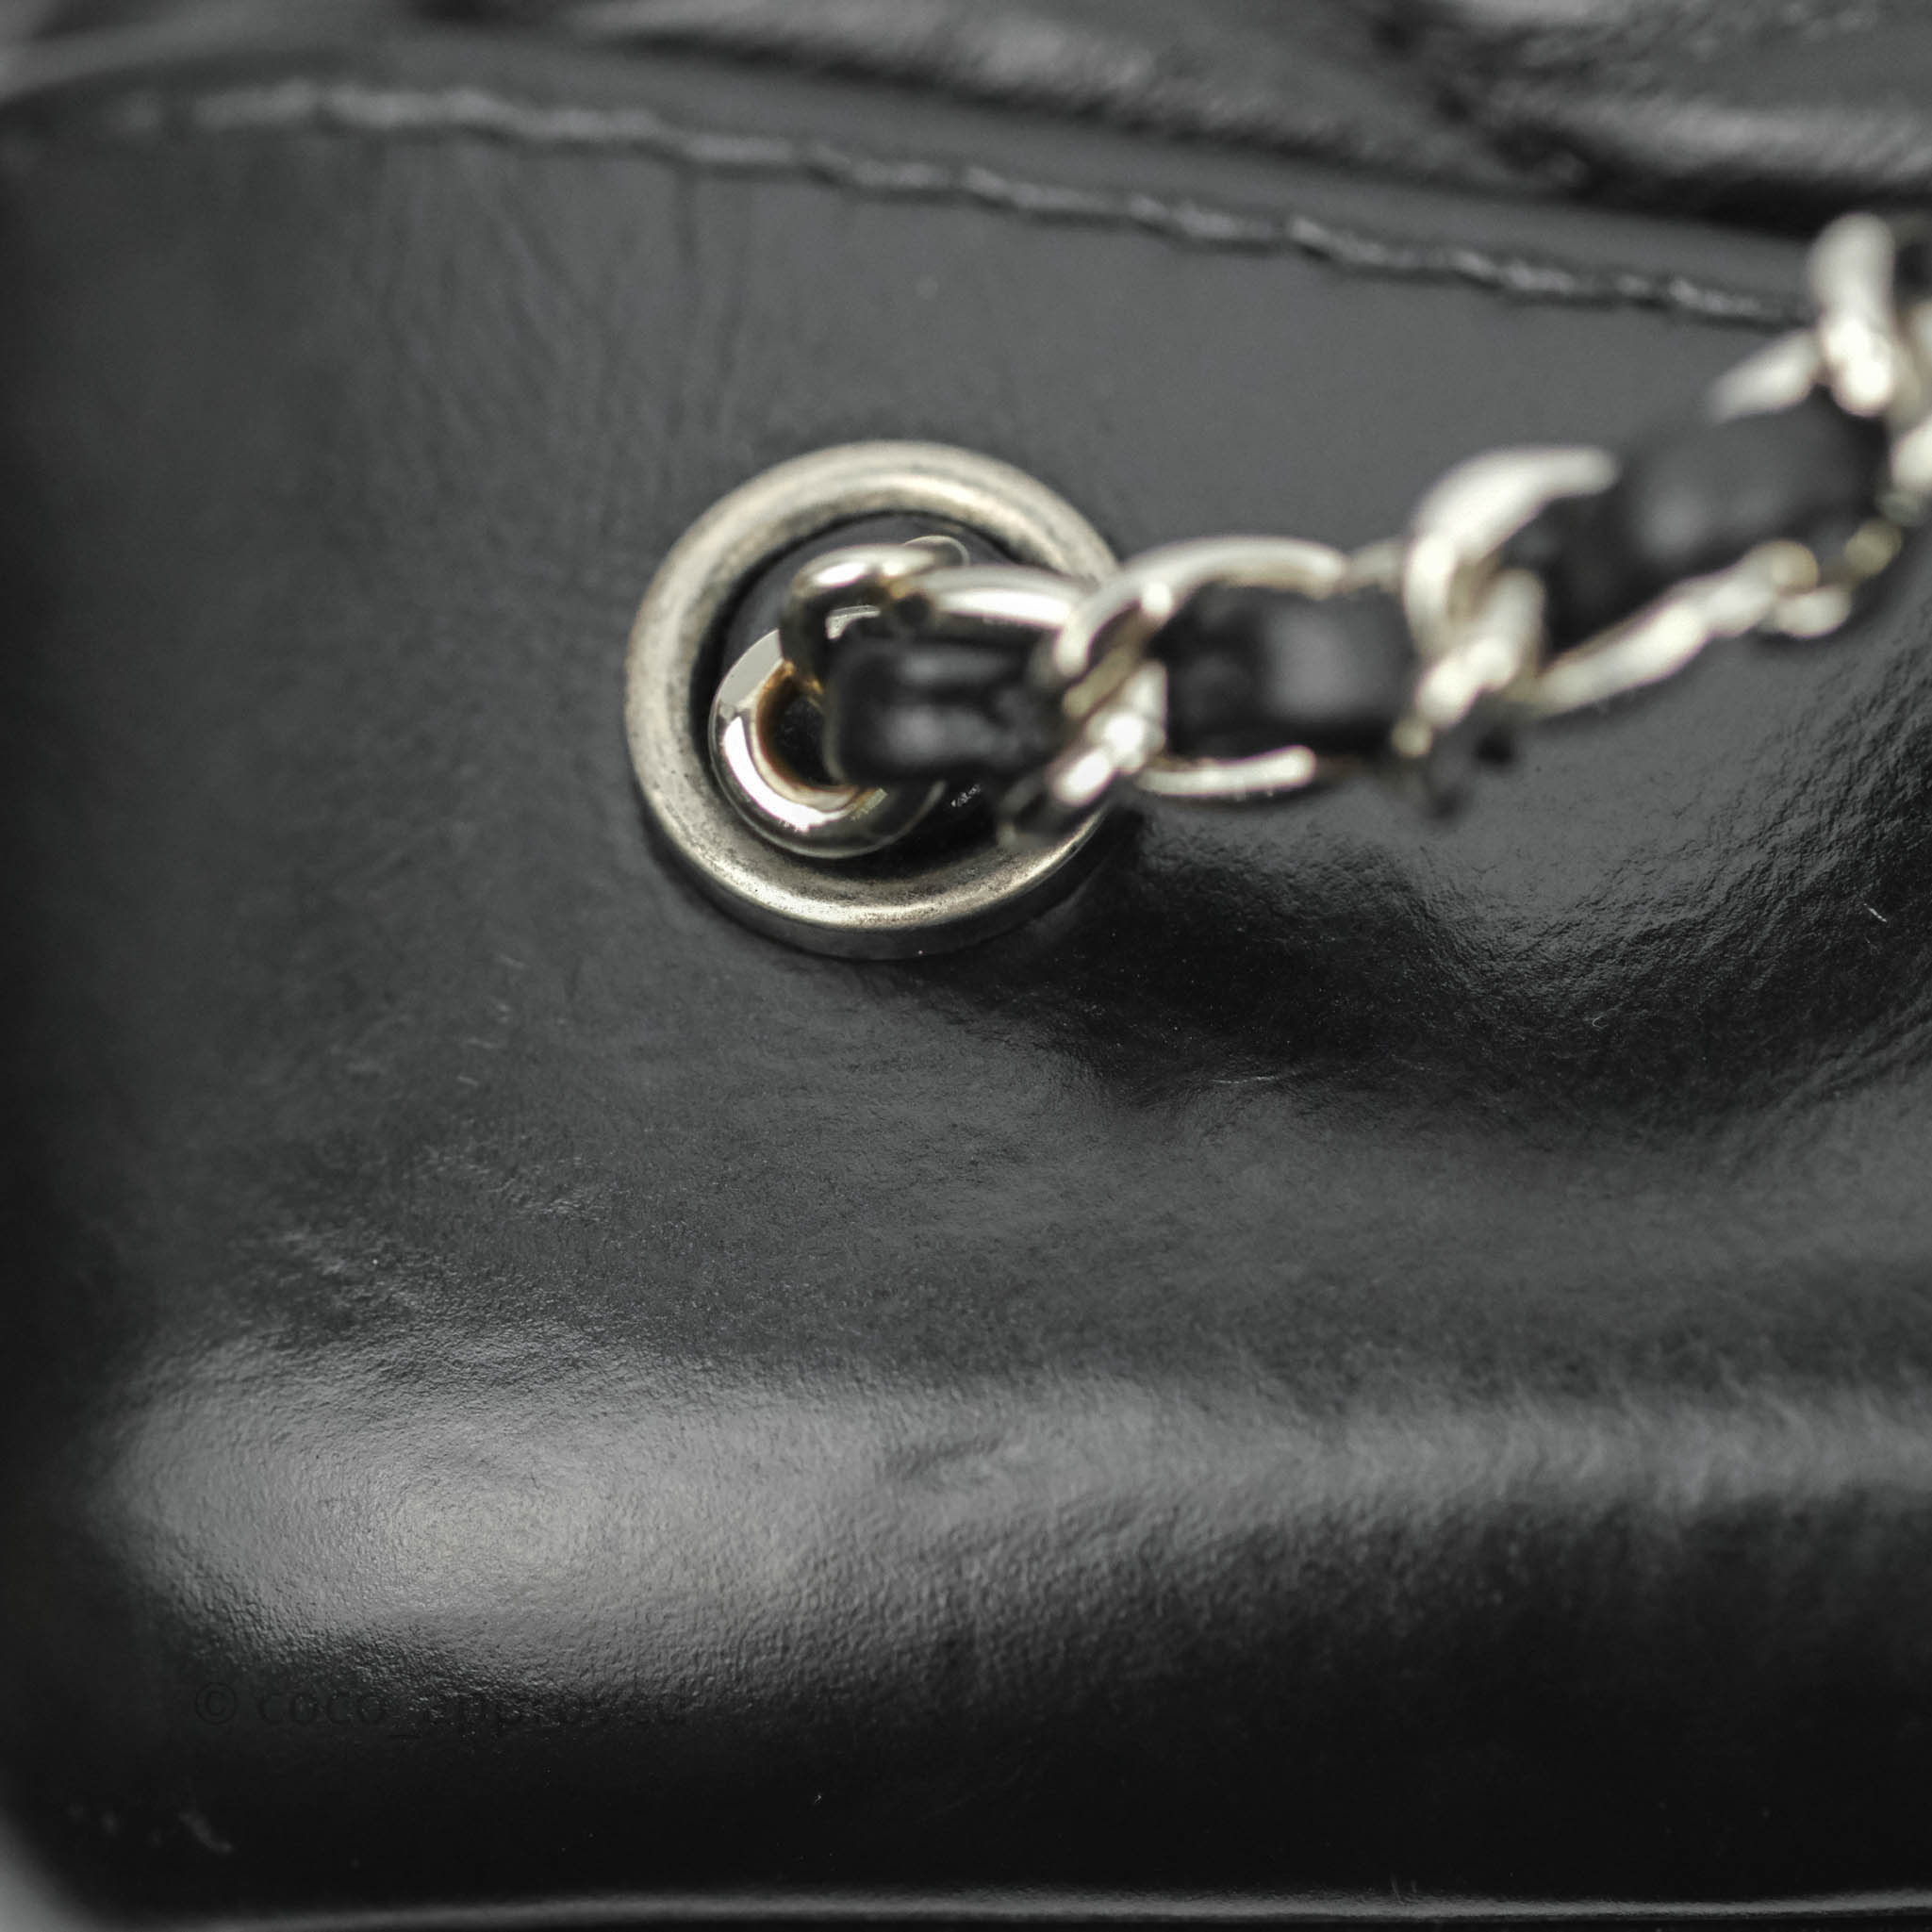 Chanel Chevron Small Gabrielle Backpack Black Aged Calfskin – Coco